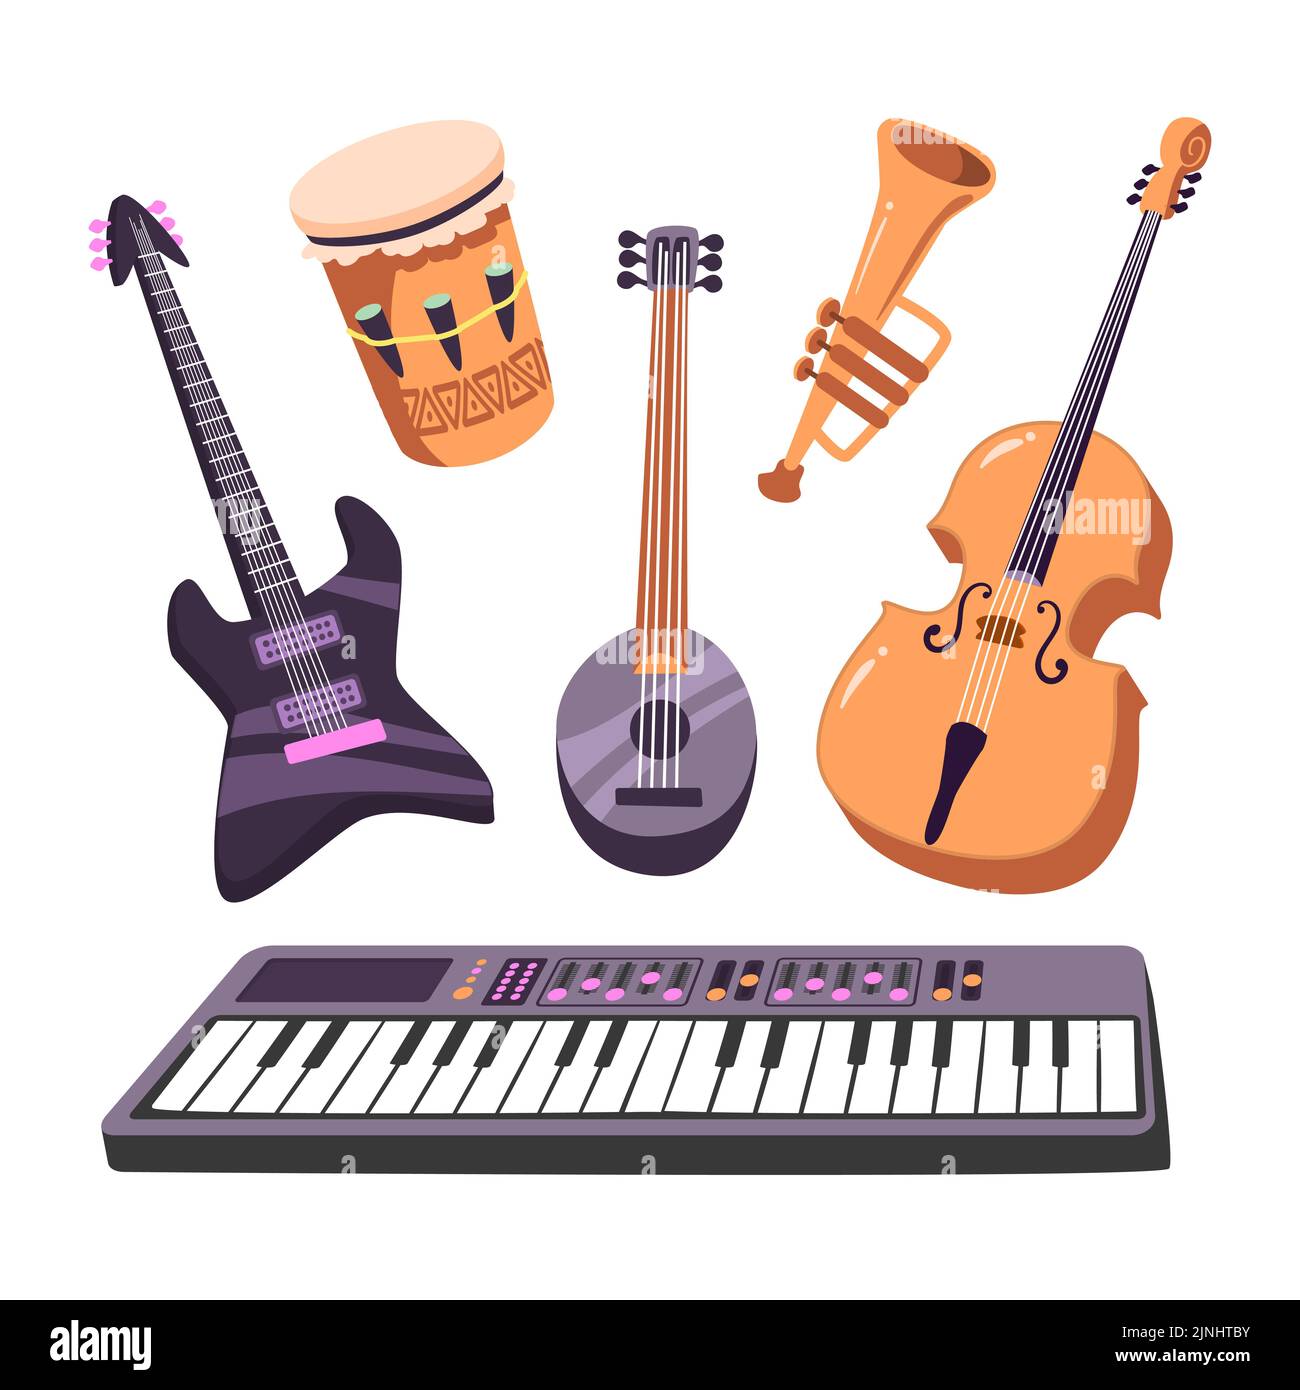 Musikinstrumente Element Set Vektor Illustration. Stock Vektor